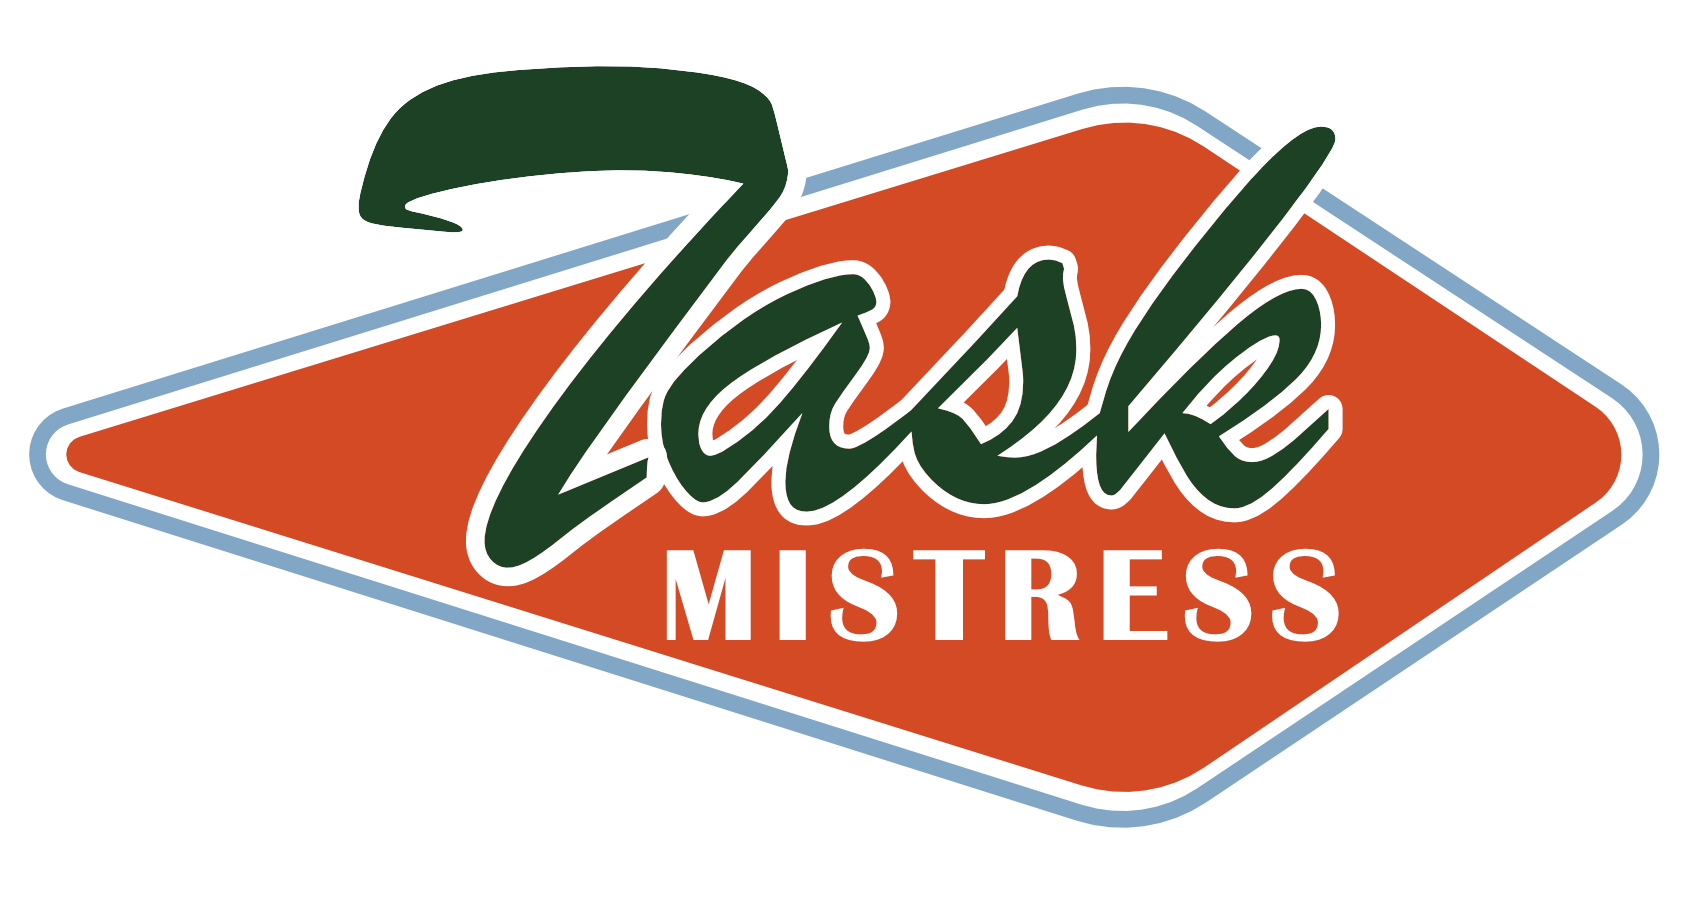 The Task-Mistress